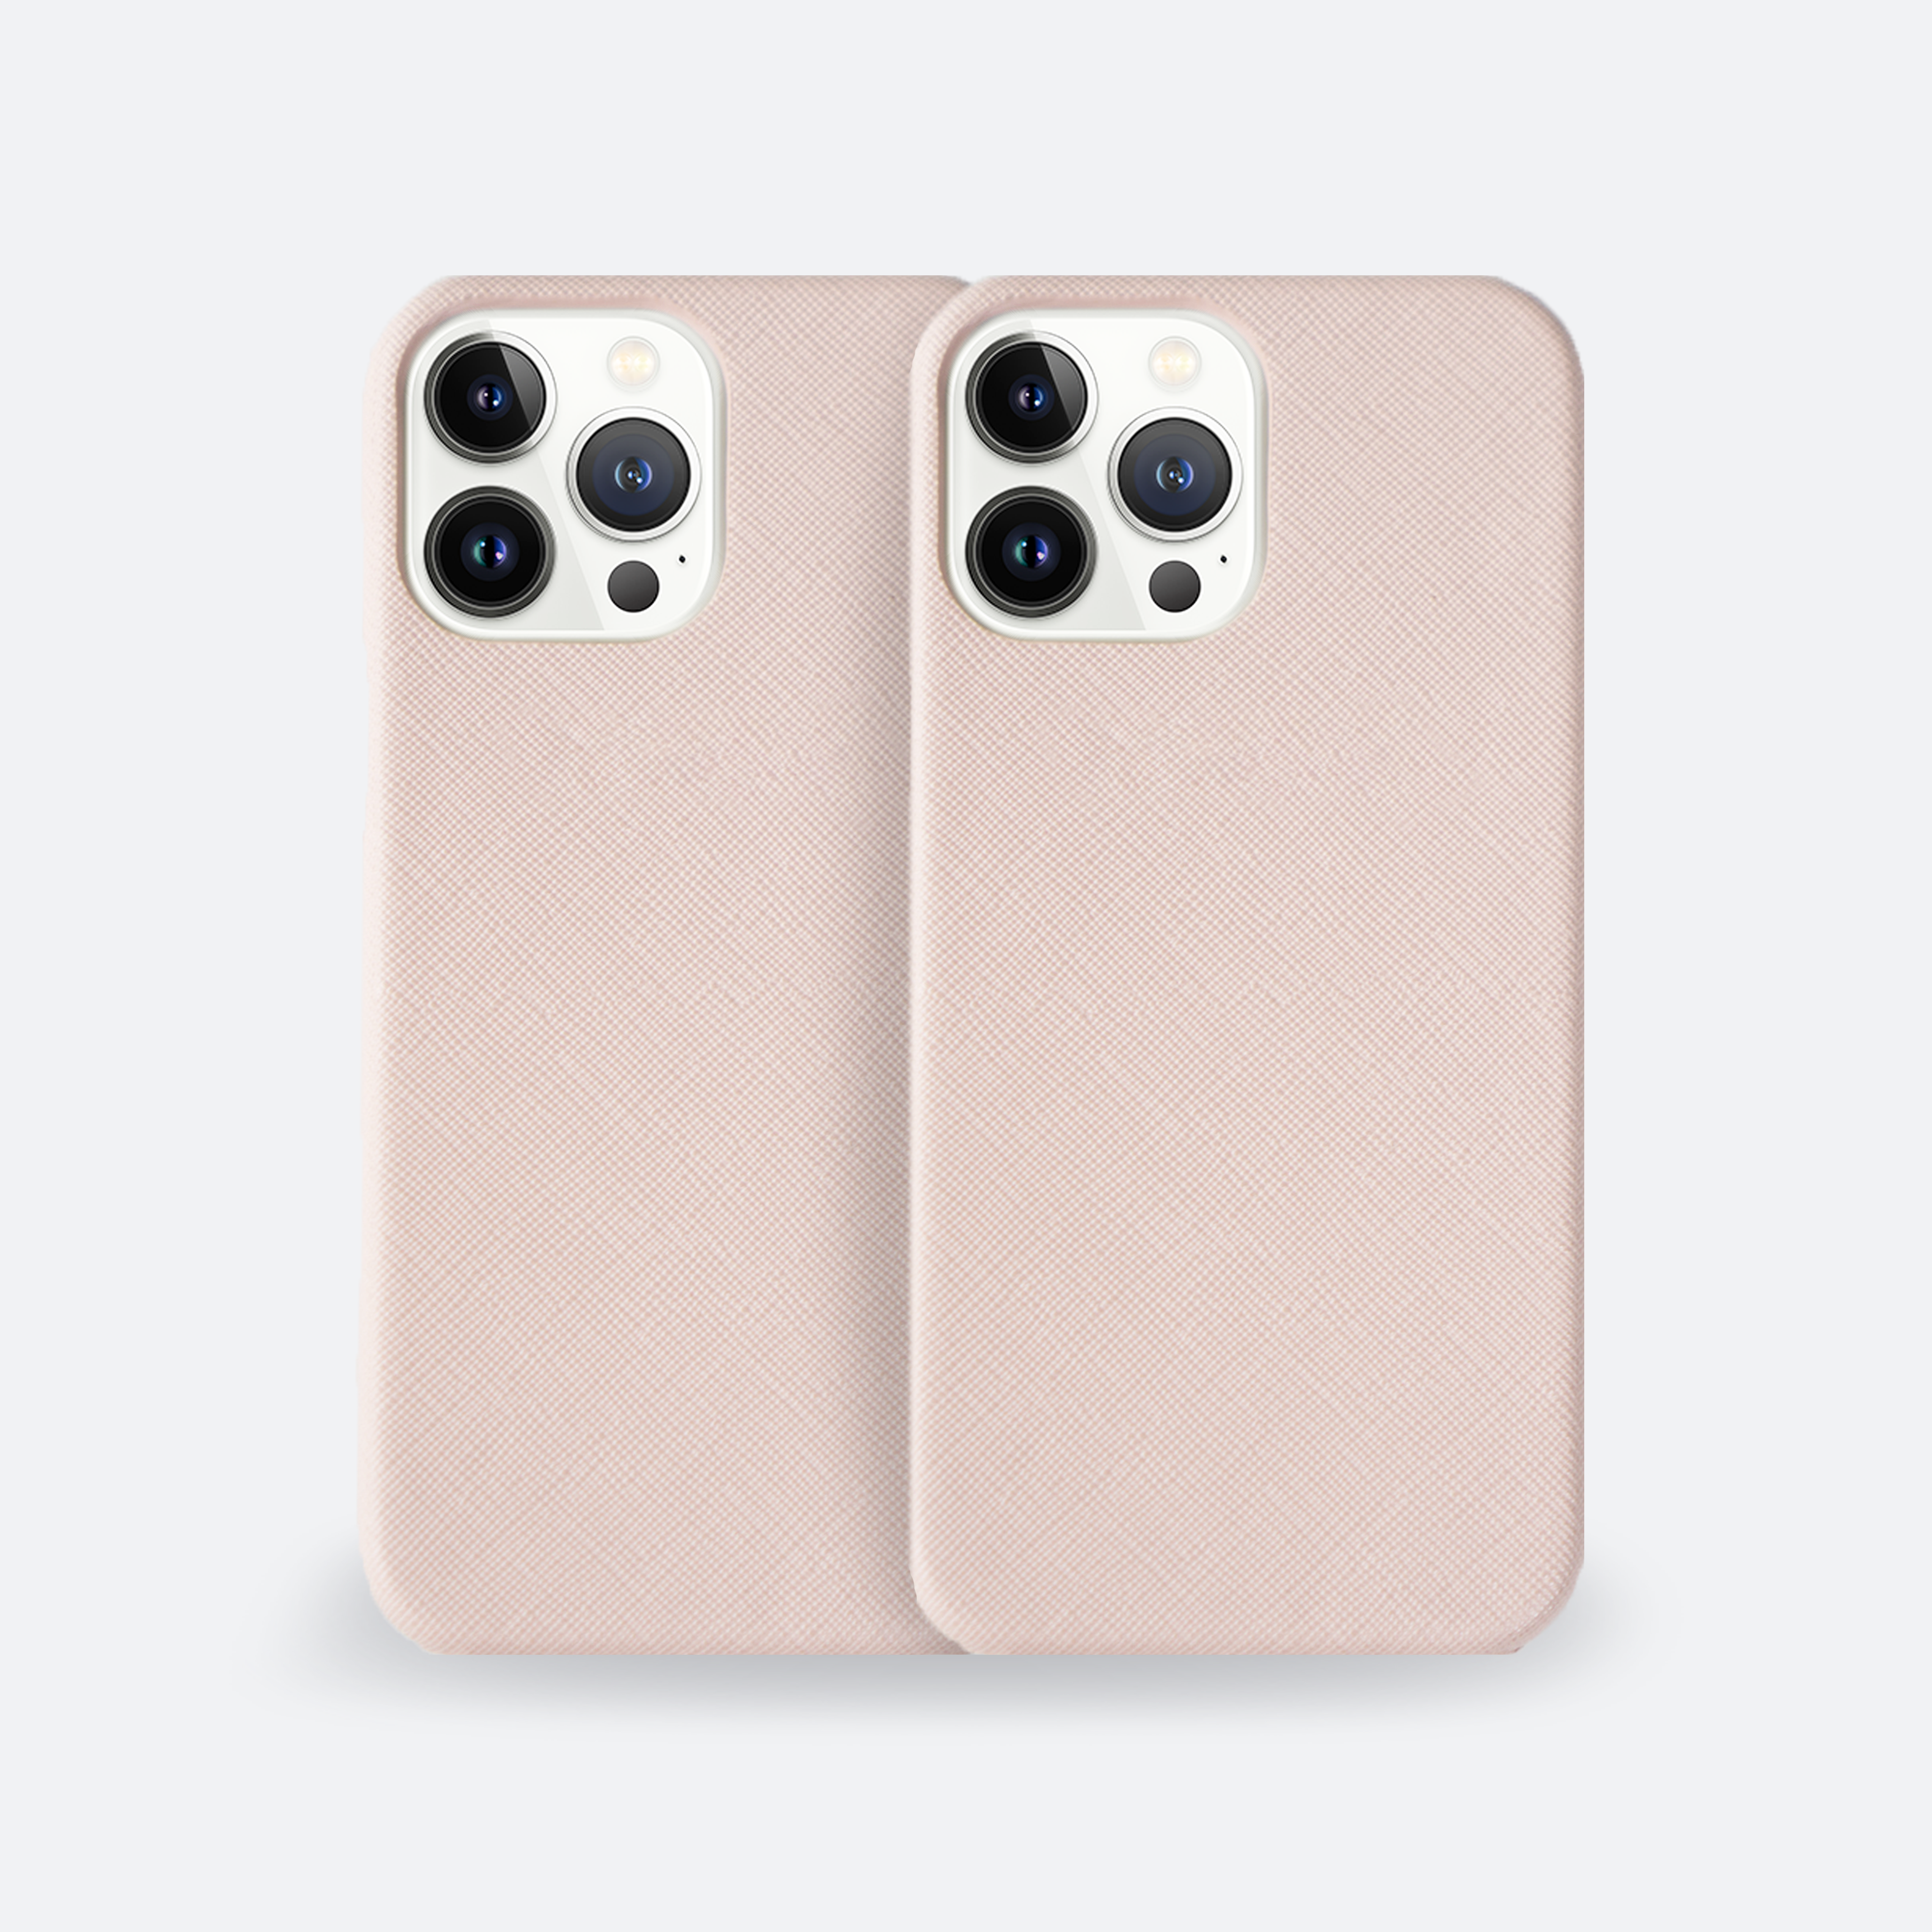 Twin iPhone Set in Peach Pink - Kastemize